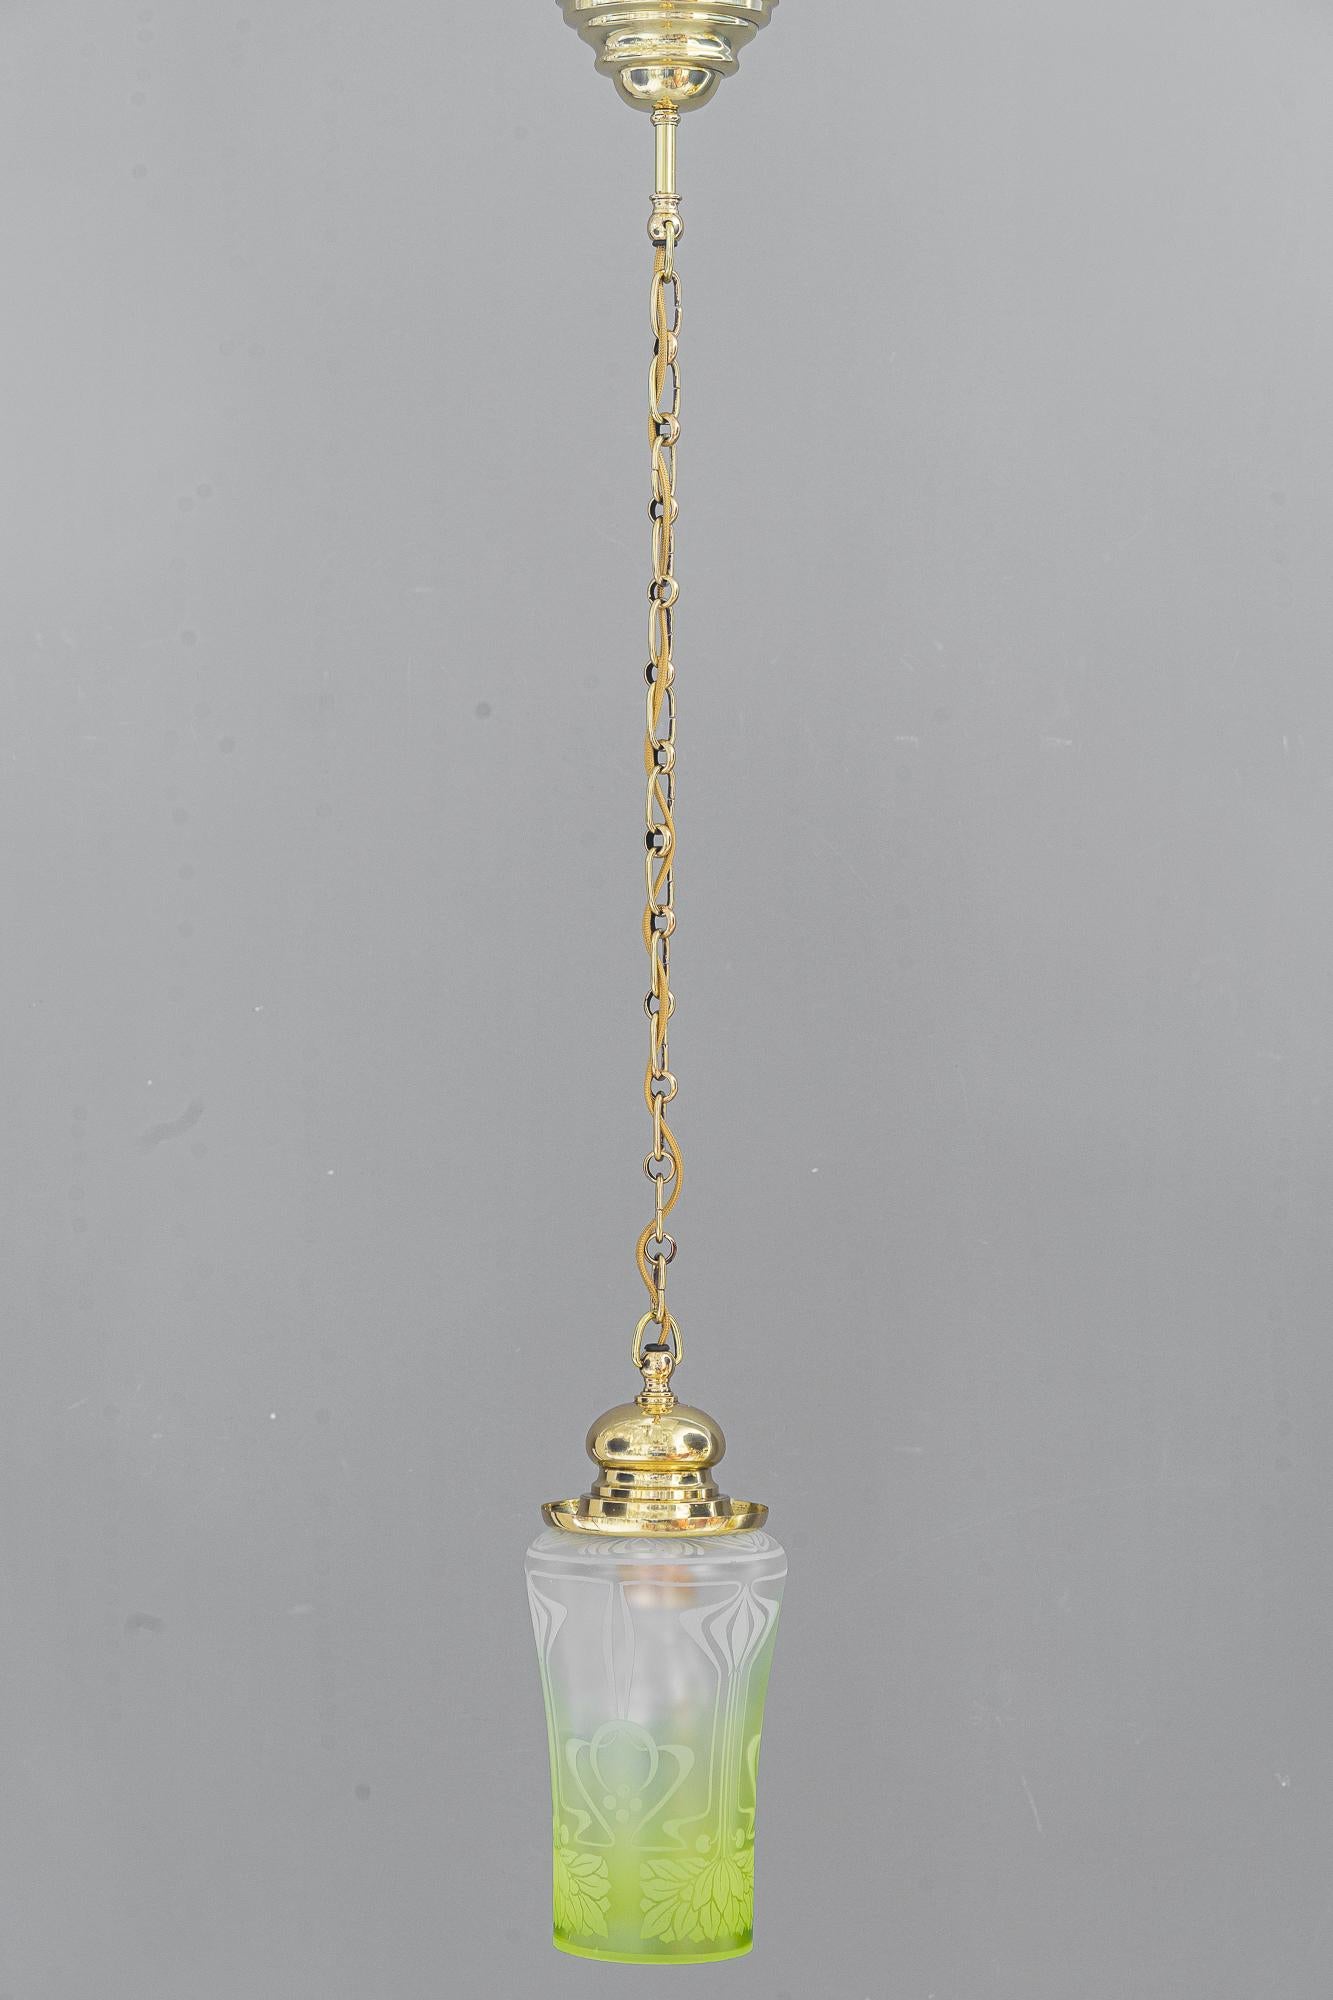 Art Deco pendant with original antique glass vienna around 1920s
Polished and stove enameled
Original antique glass shade